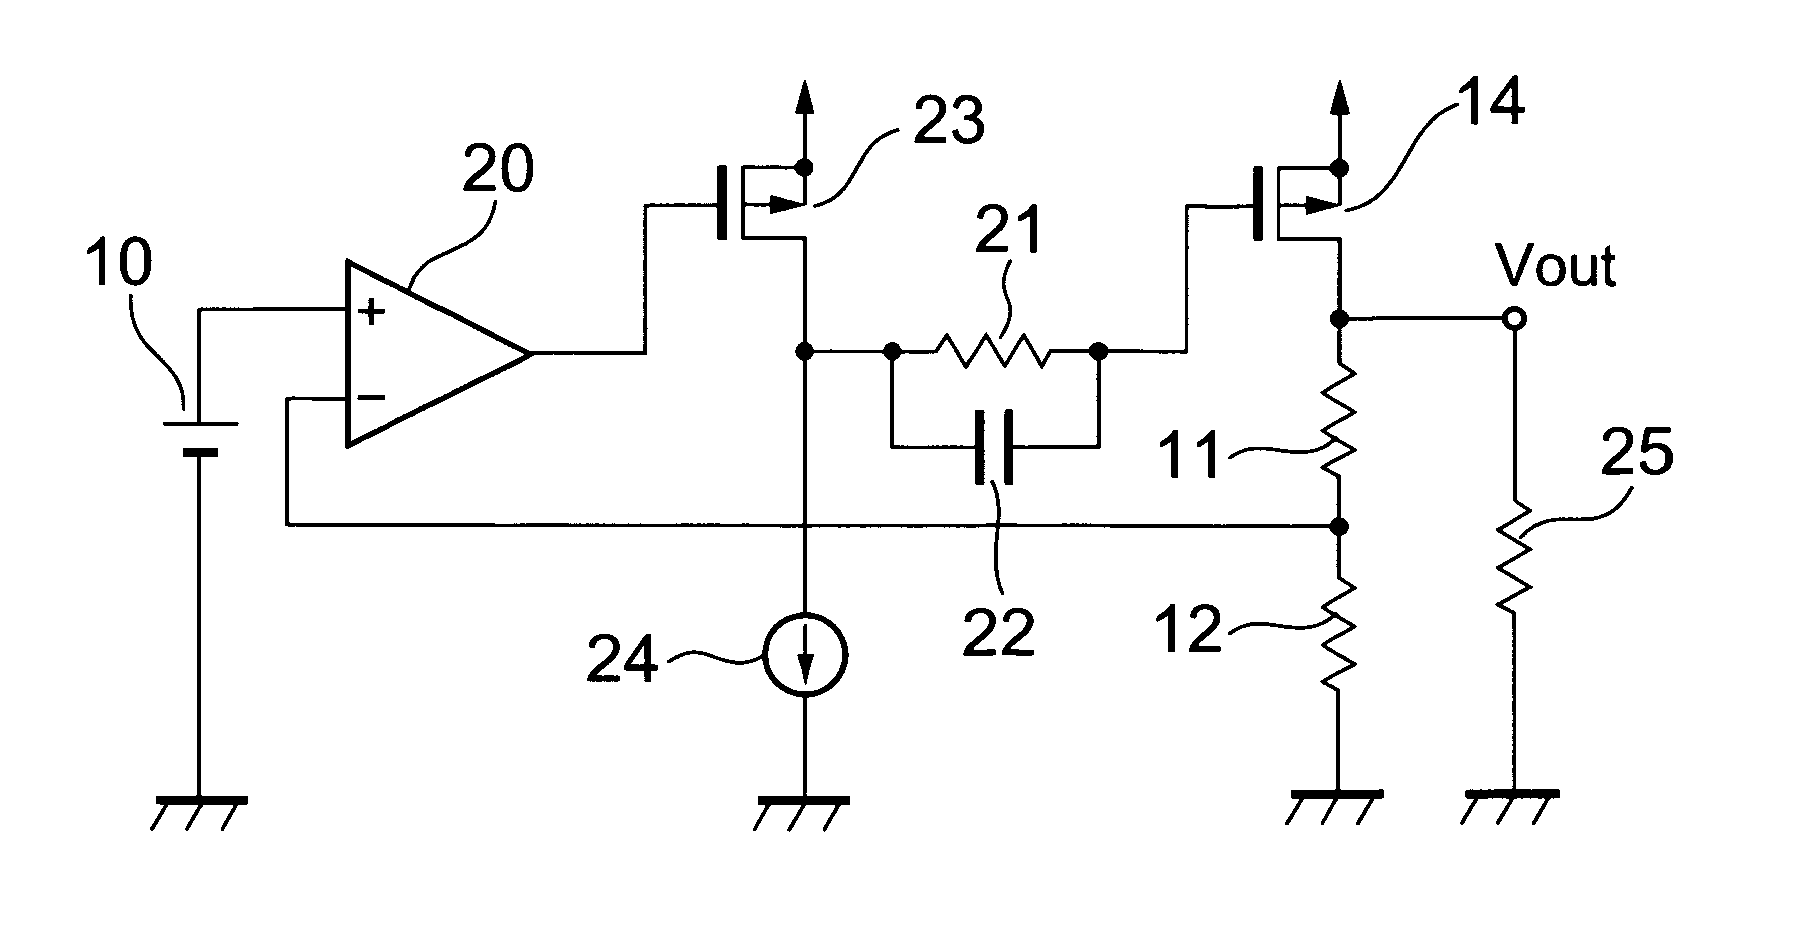 Voltage regulator with phase compensation